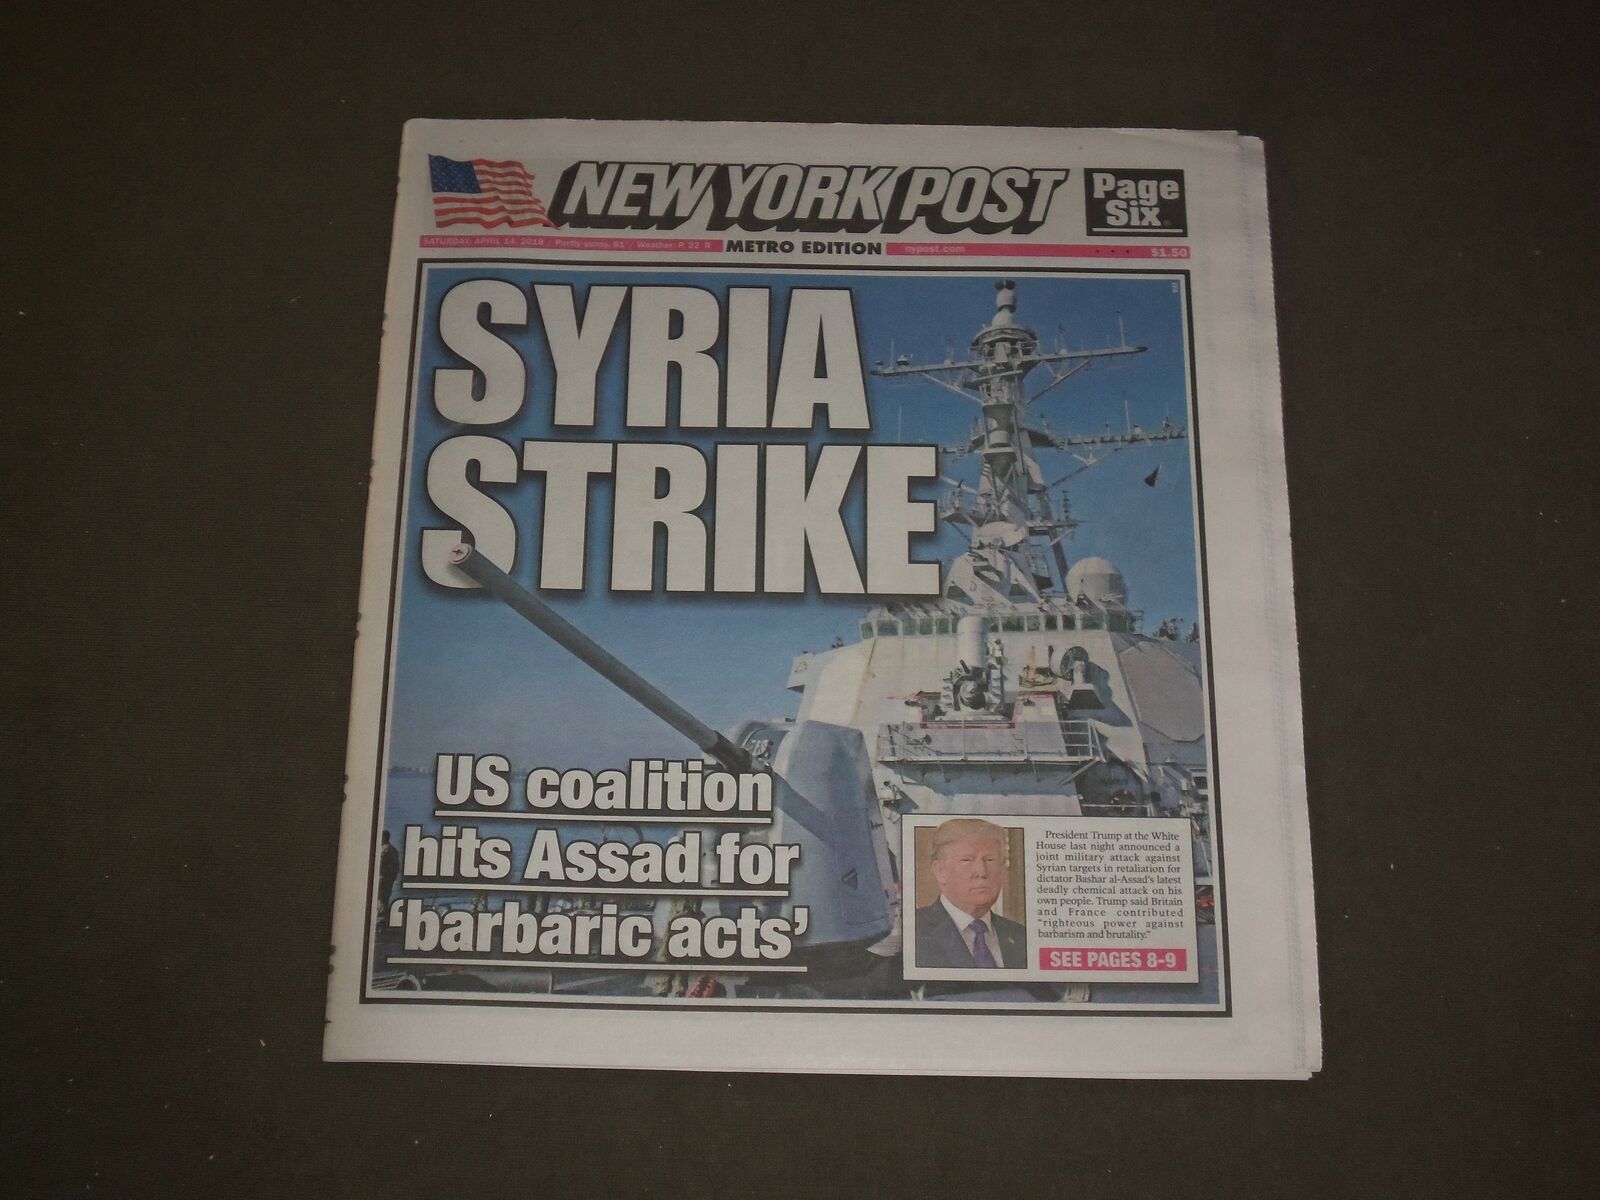 2018 APRIL 14 NEW YORK POST NEWSPAPER - METRO EDITION - SYRIA STRIKE